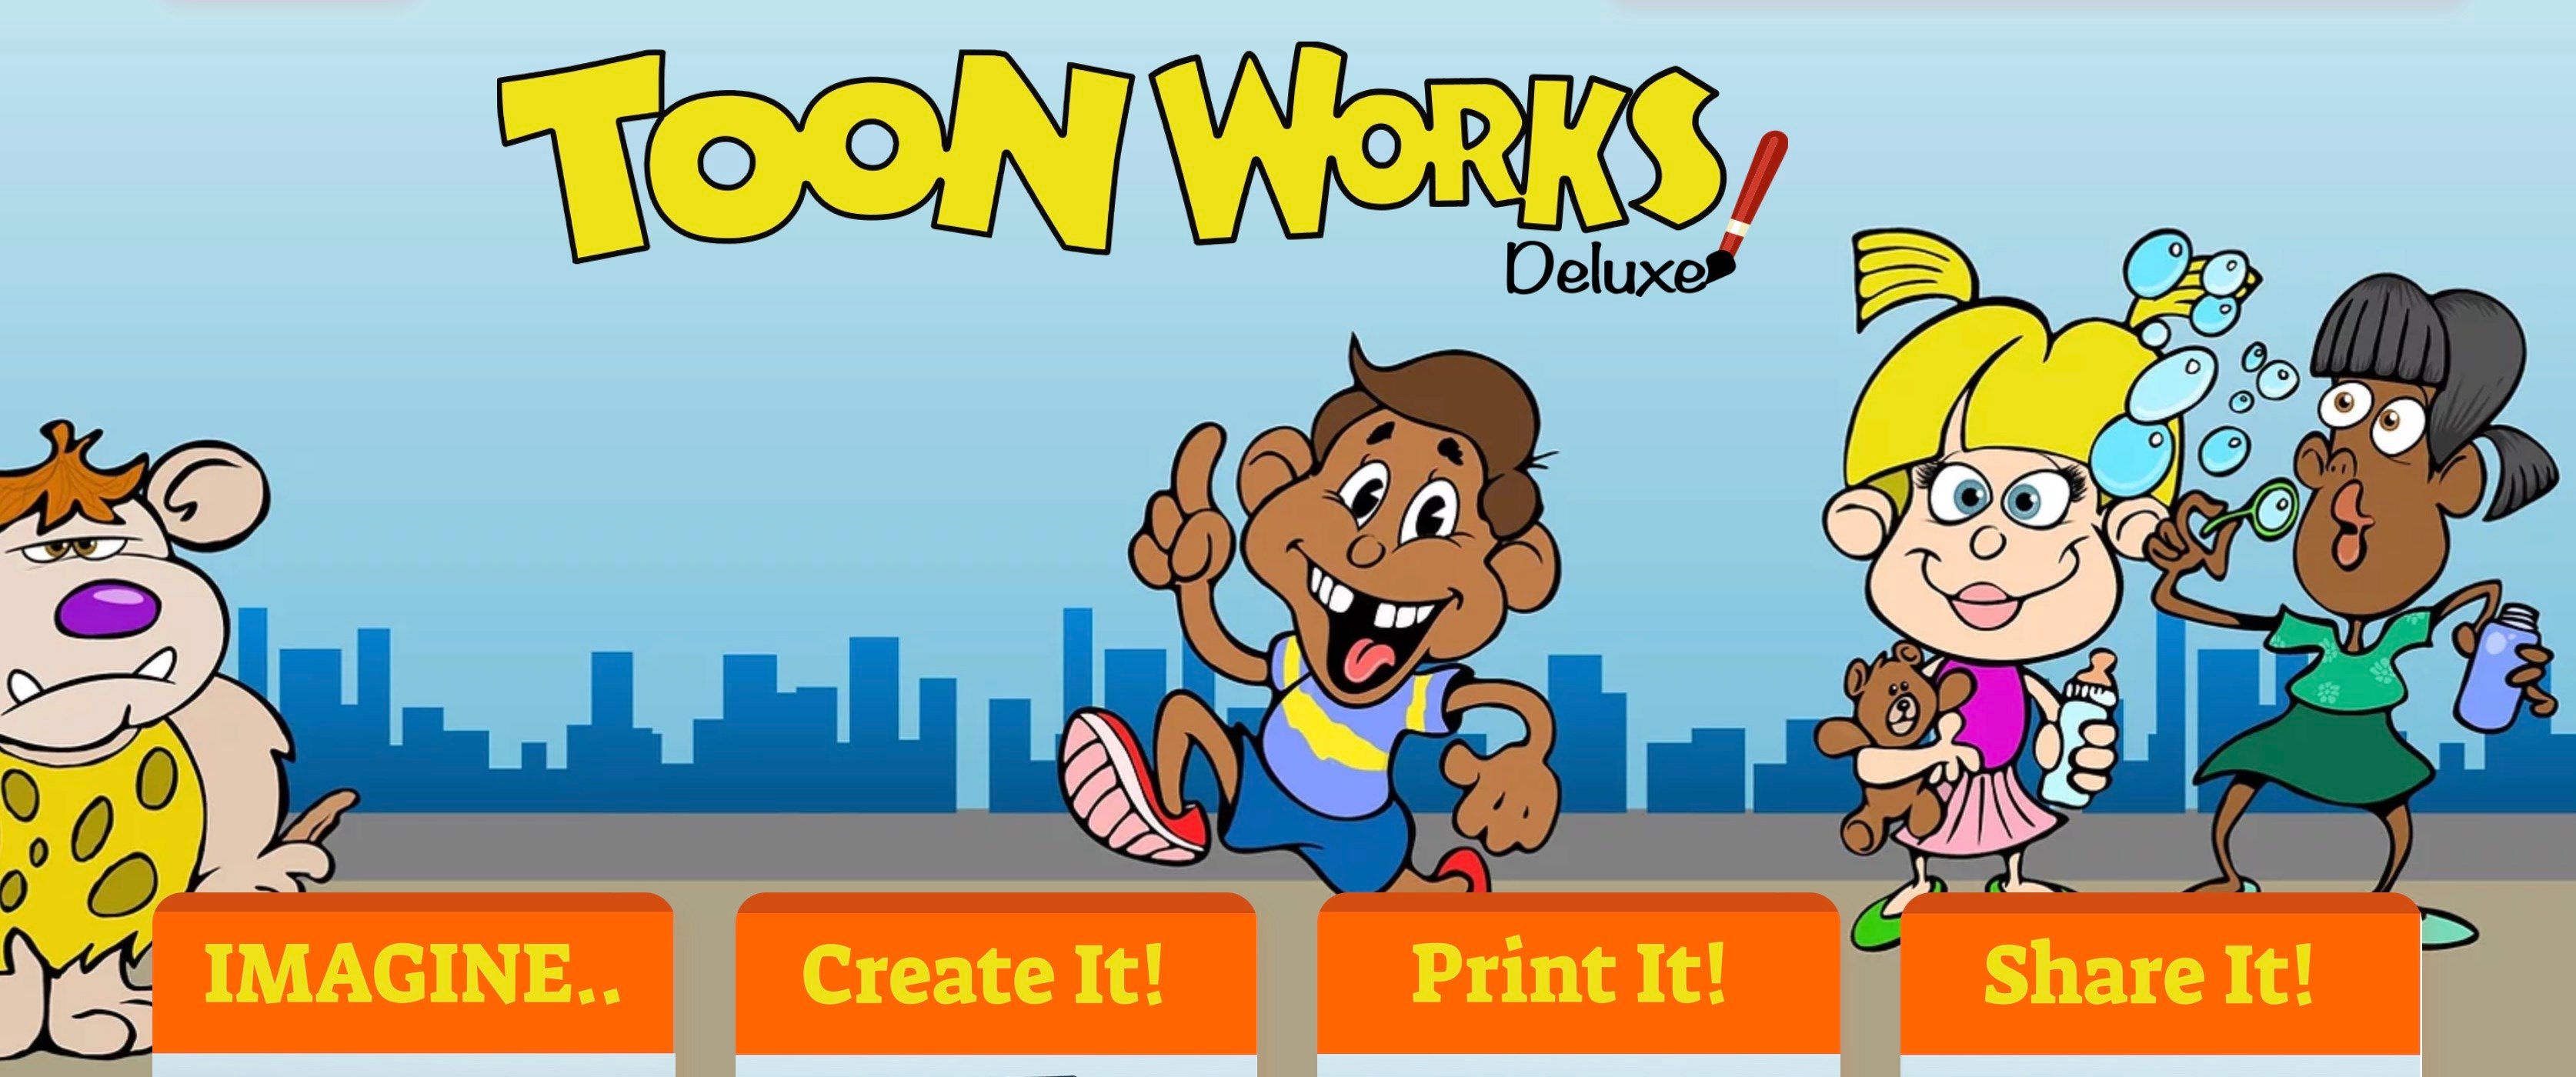 Our website header was designed in Toonworks Deluxe Remastered!  It works for big kids too!